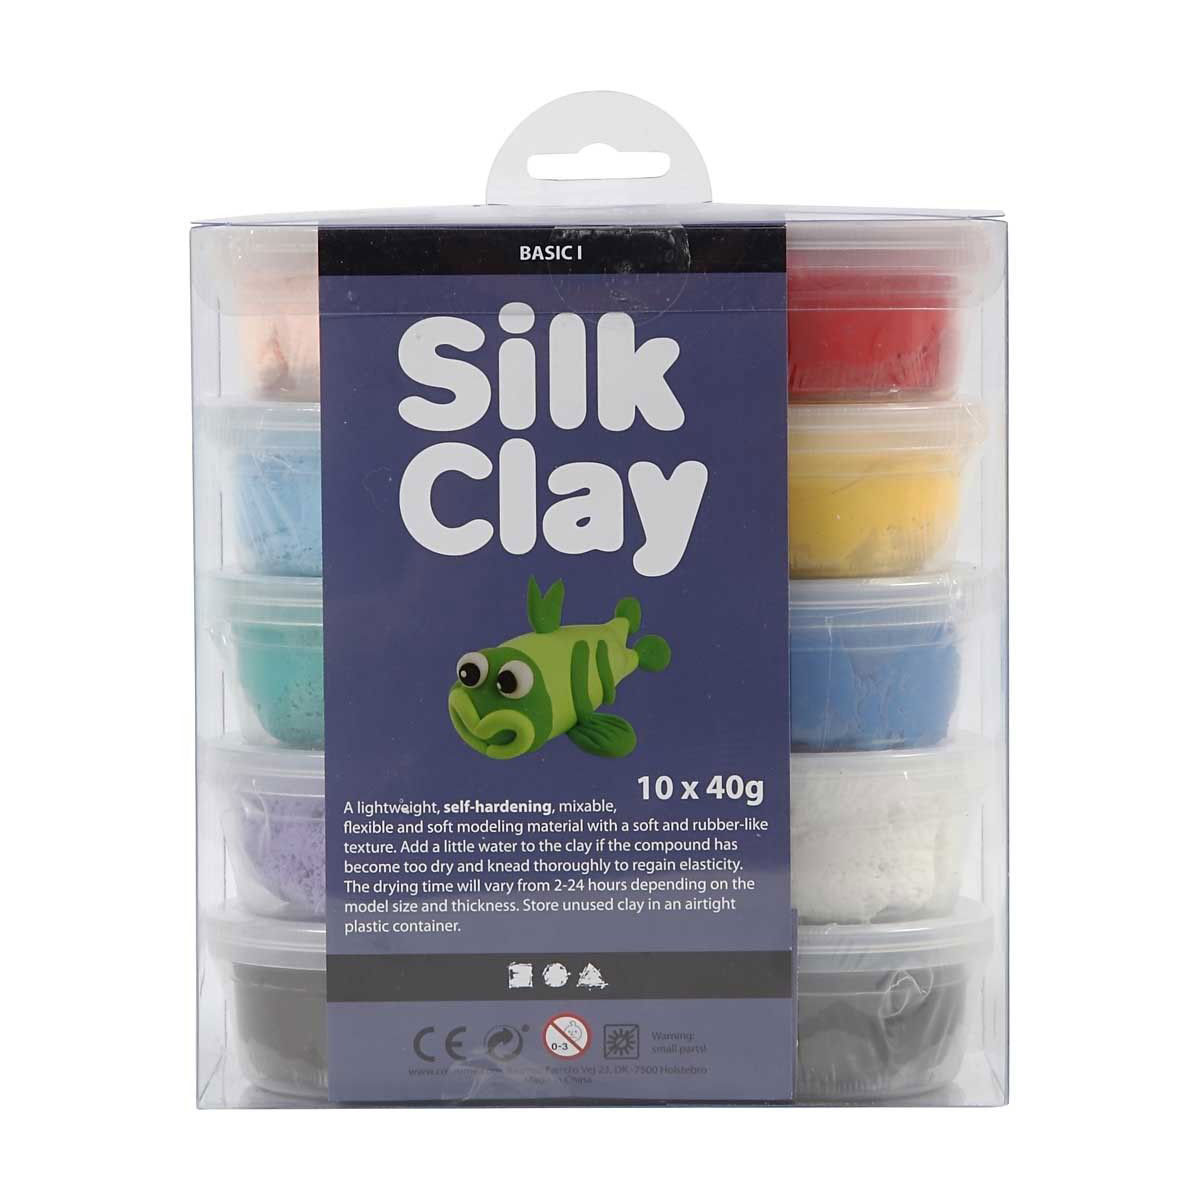 Silk Clay - Couleurs de base, 10x40gr.